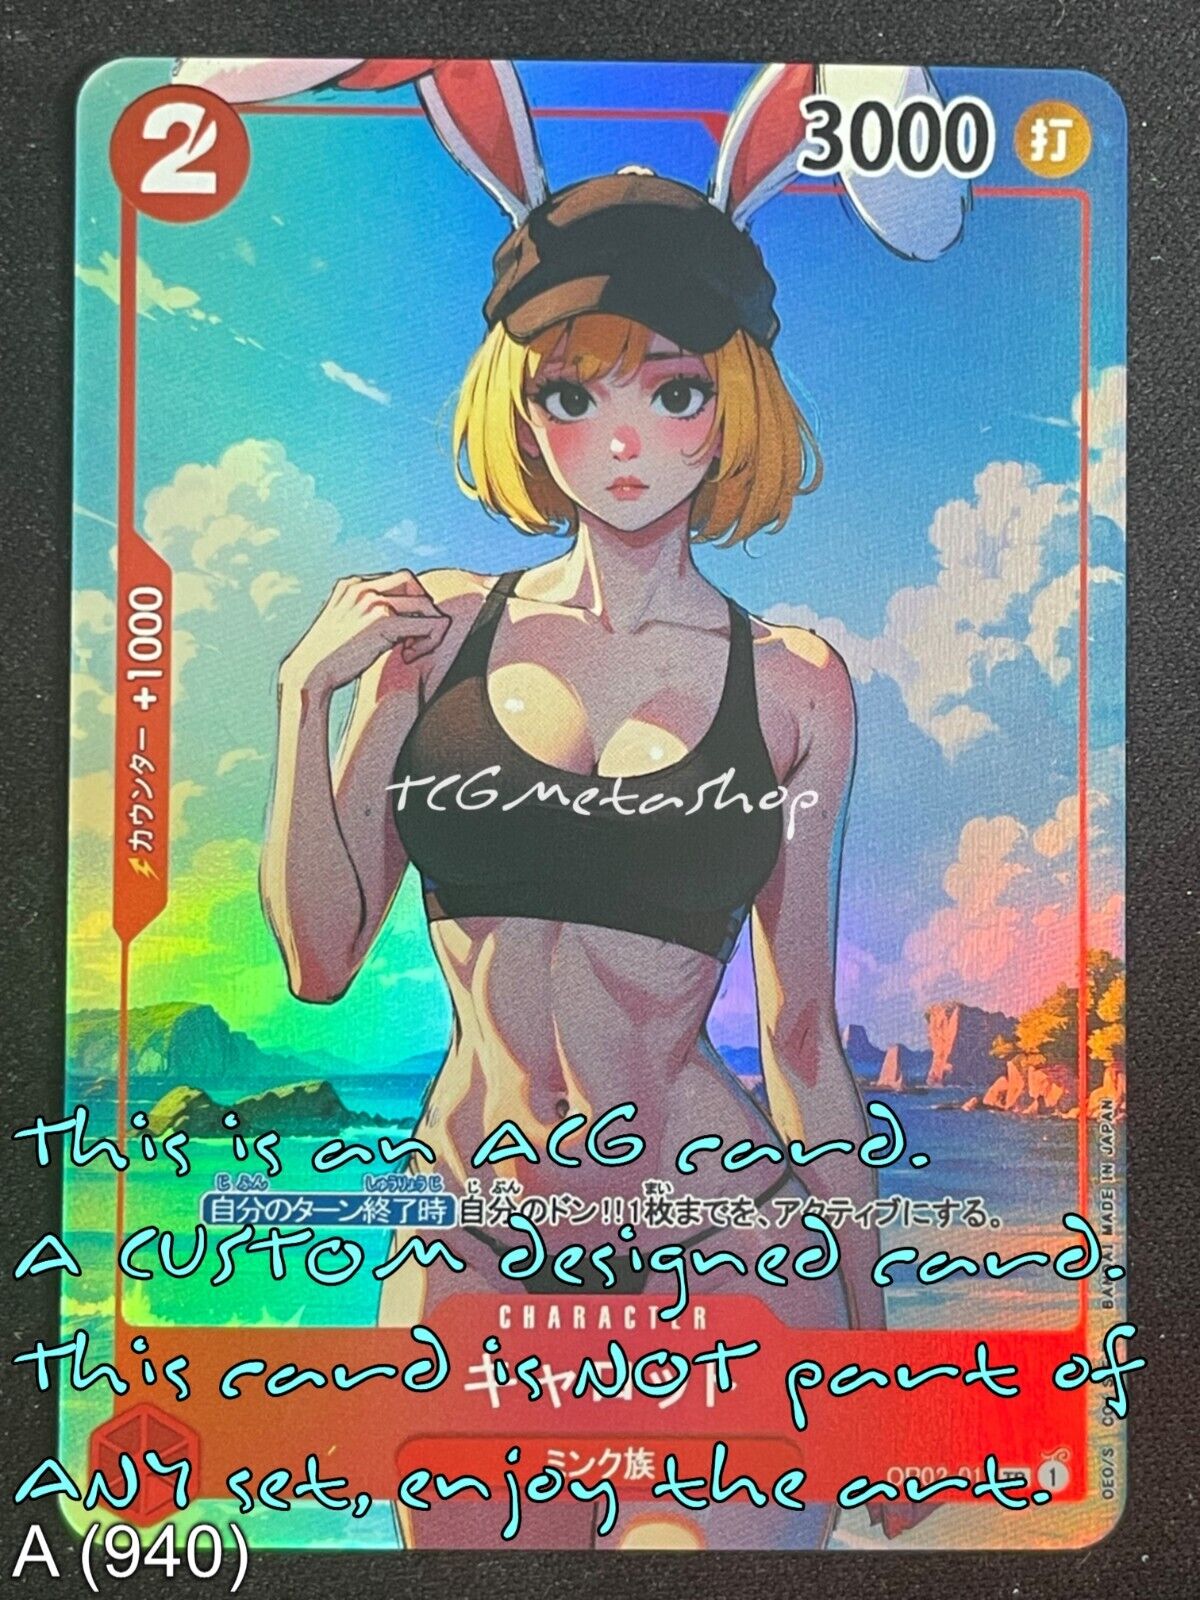 🔥 A 940 Carrot One Piece Goddess Story Anime Waifu Card ACG 🔥